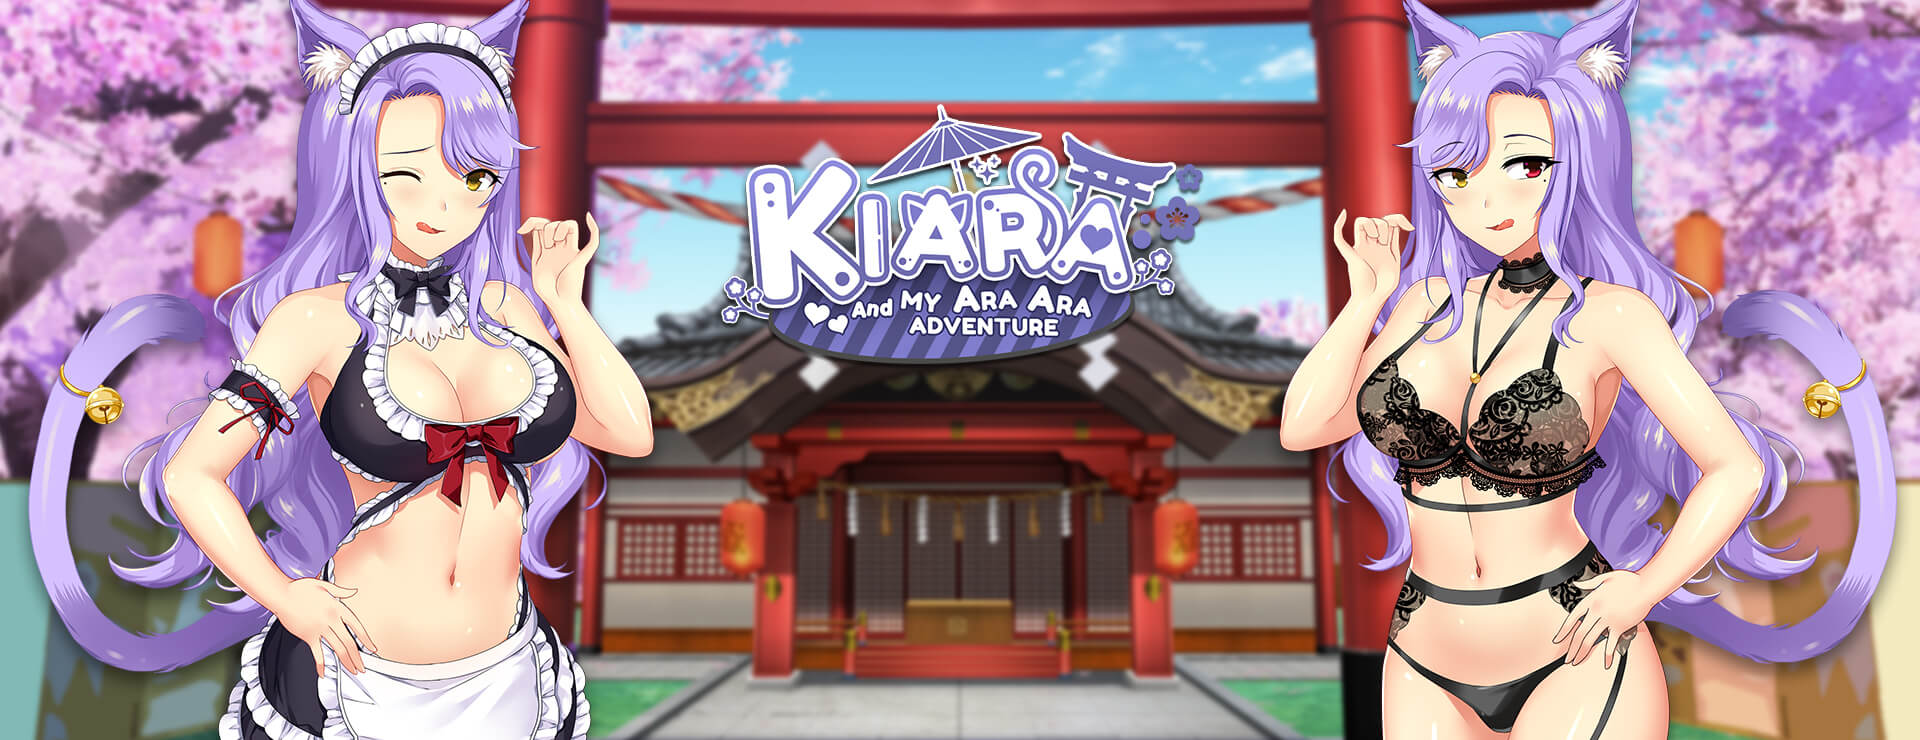 Kiara and my Ara Ara Adventure - Japanisches Adventure Spiel